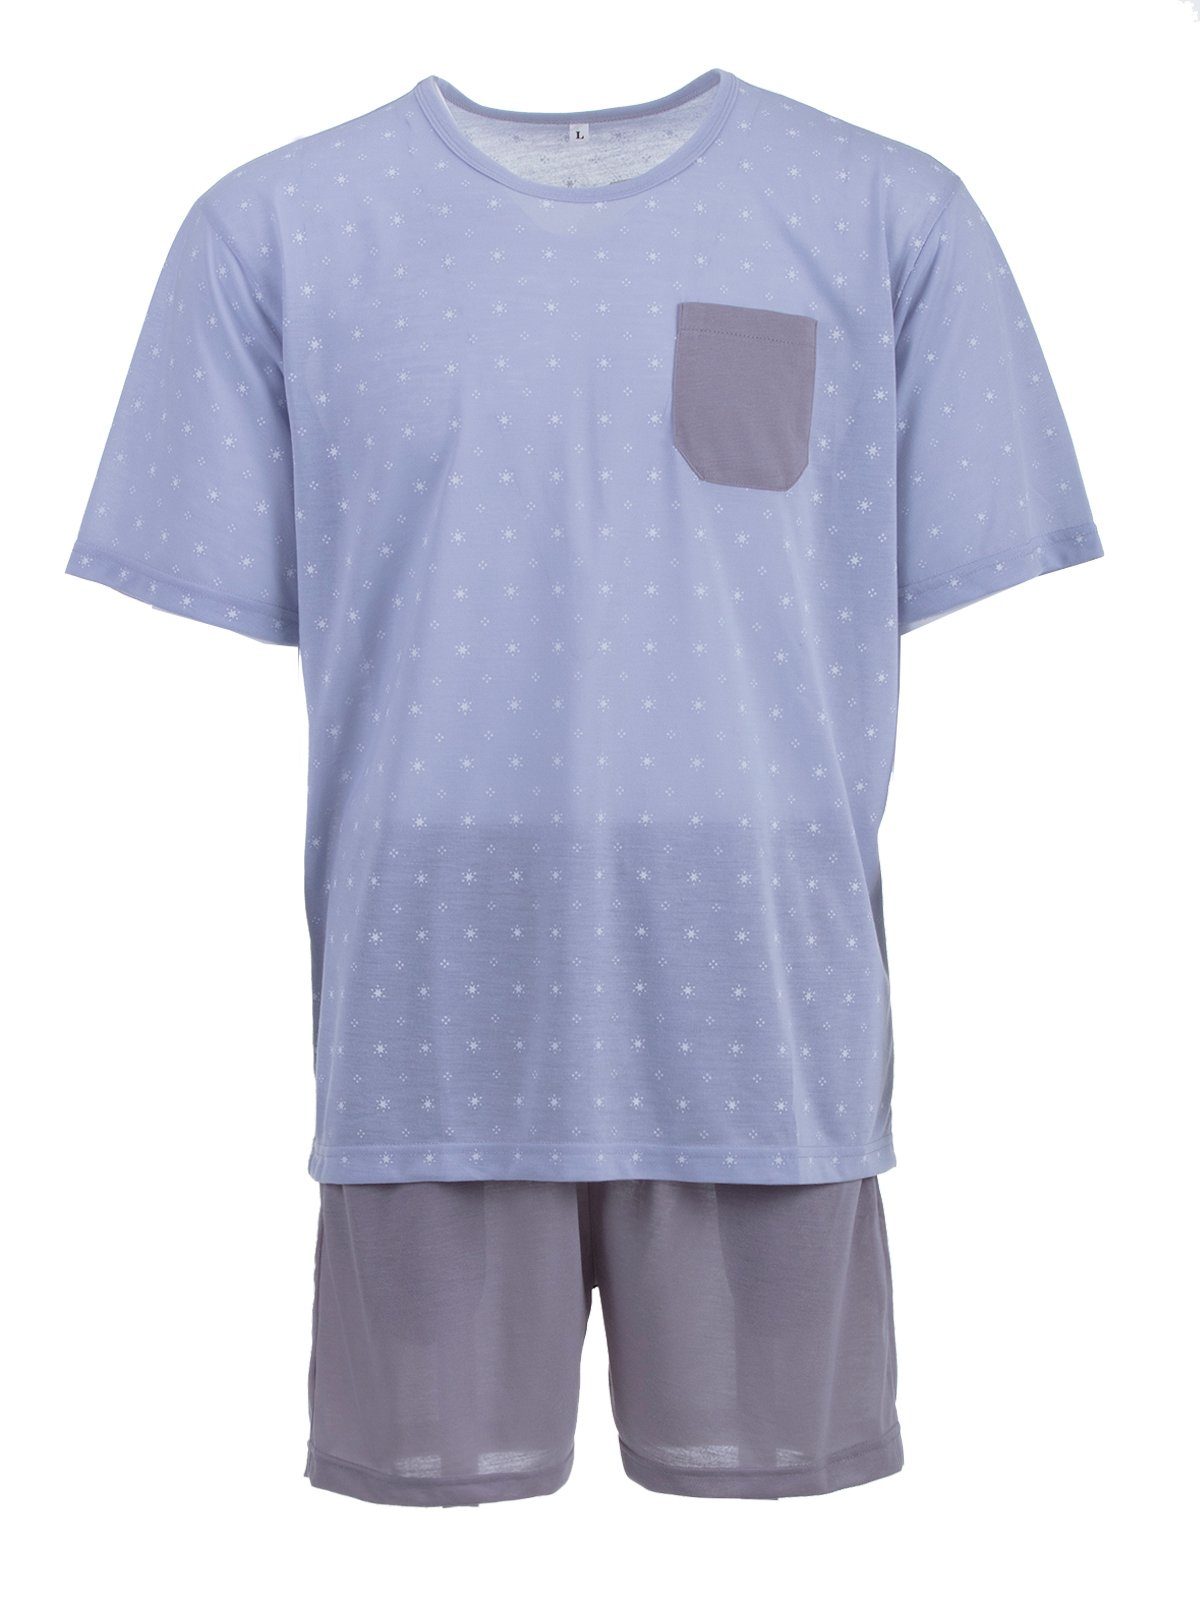 grau Schlafanzug Pyjama Set Sonne - Tasche Lucky Shorty